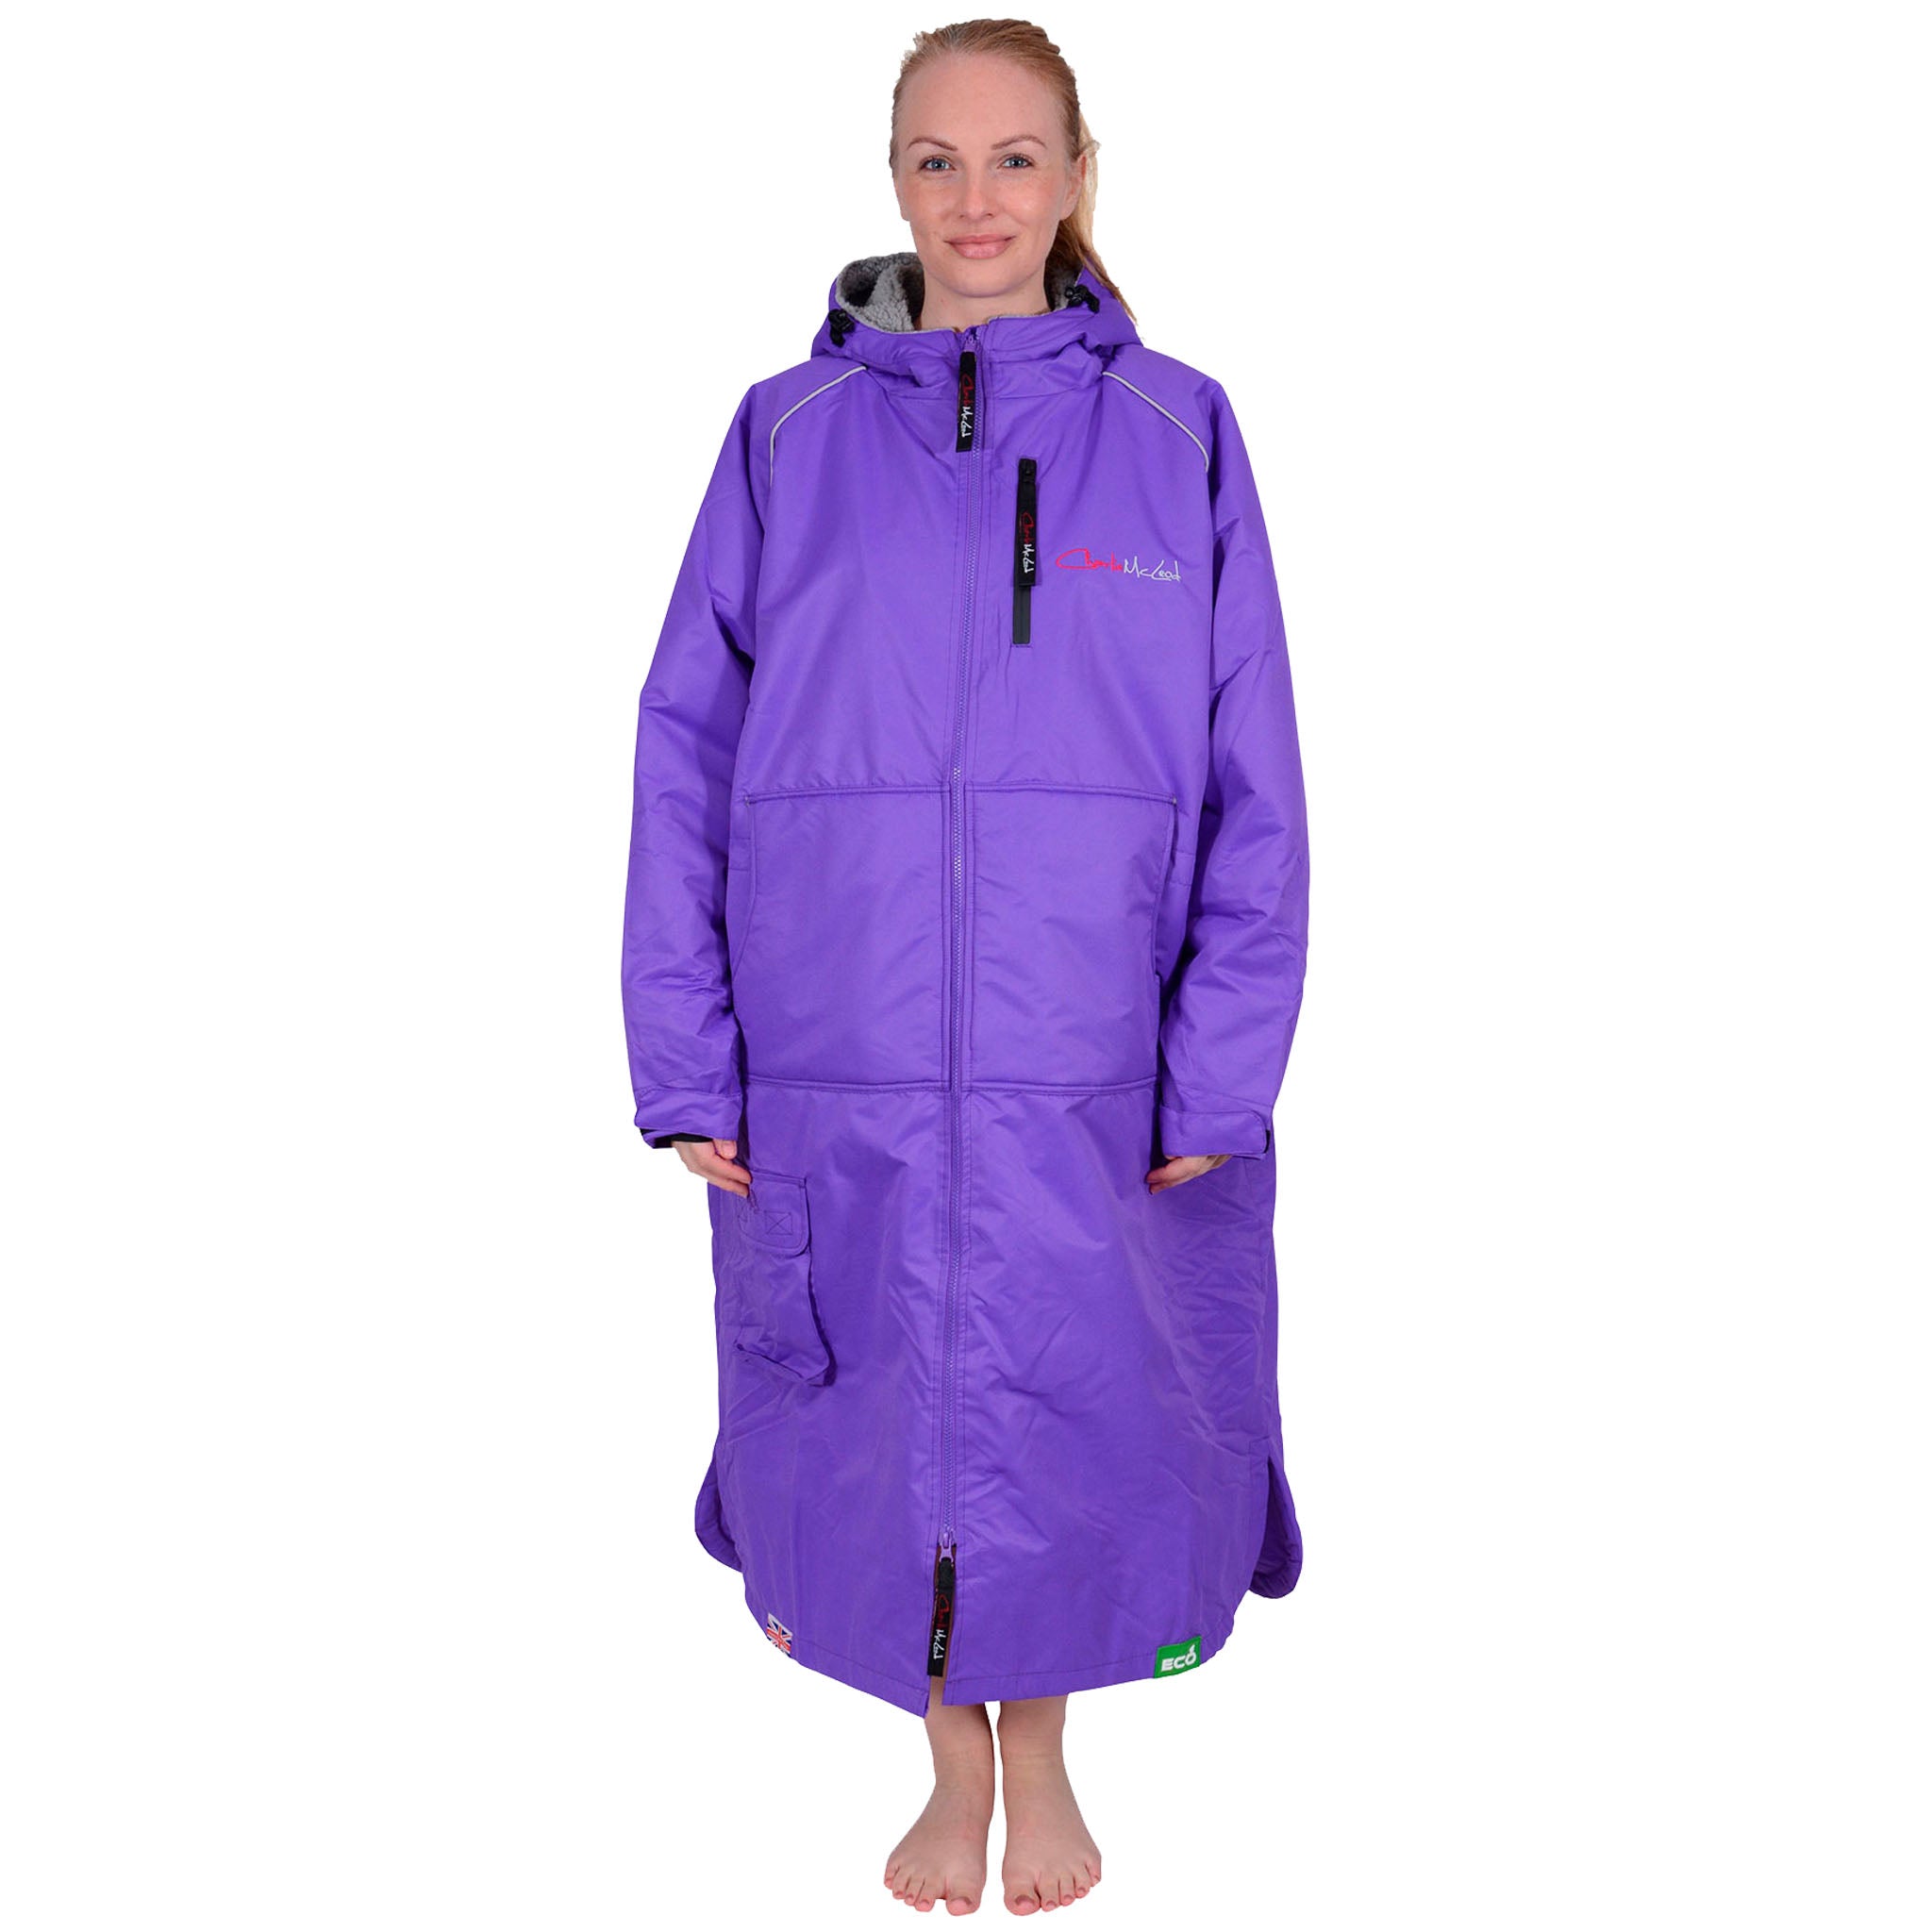 Charlie McLeod Eco Sports Cloak Long Sleeve Change Unisex Robe - Purple/Grey Front